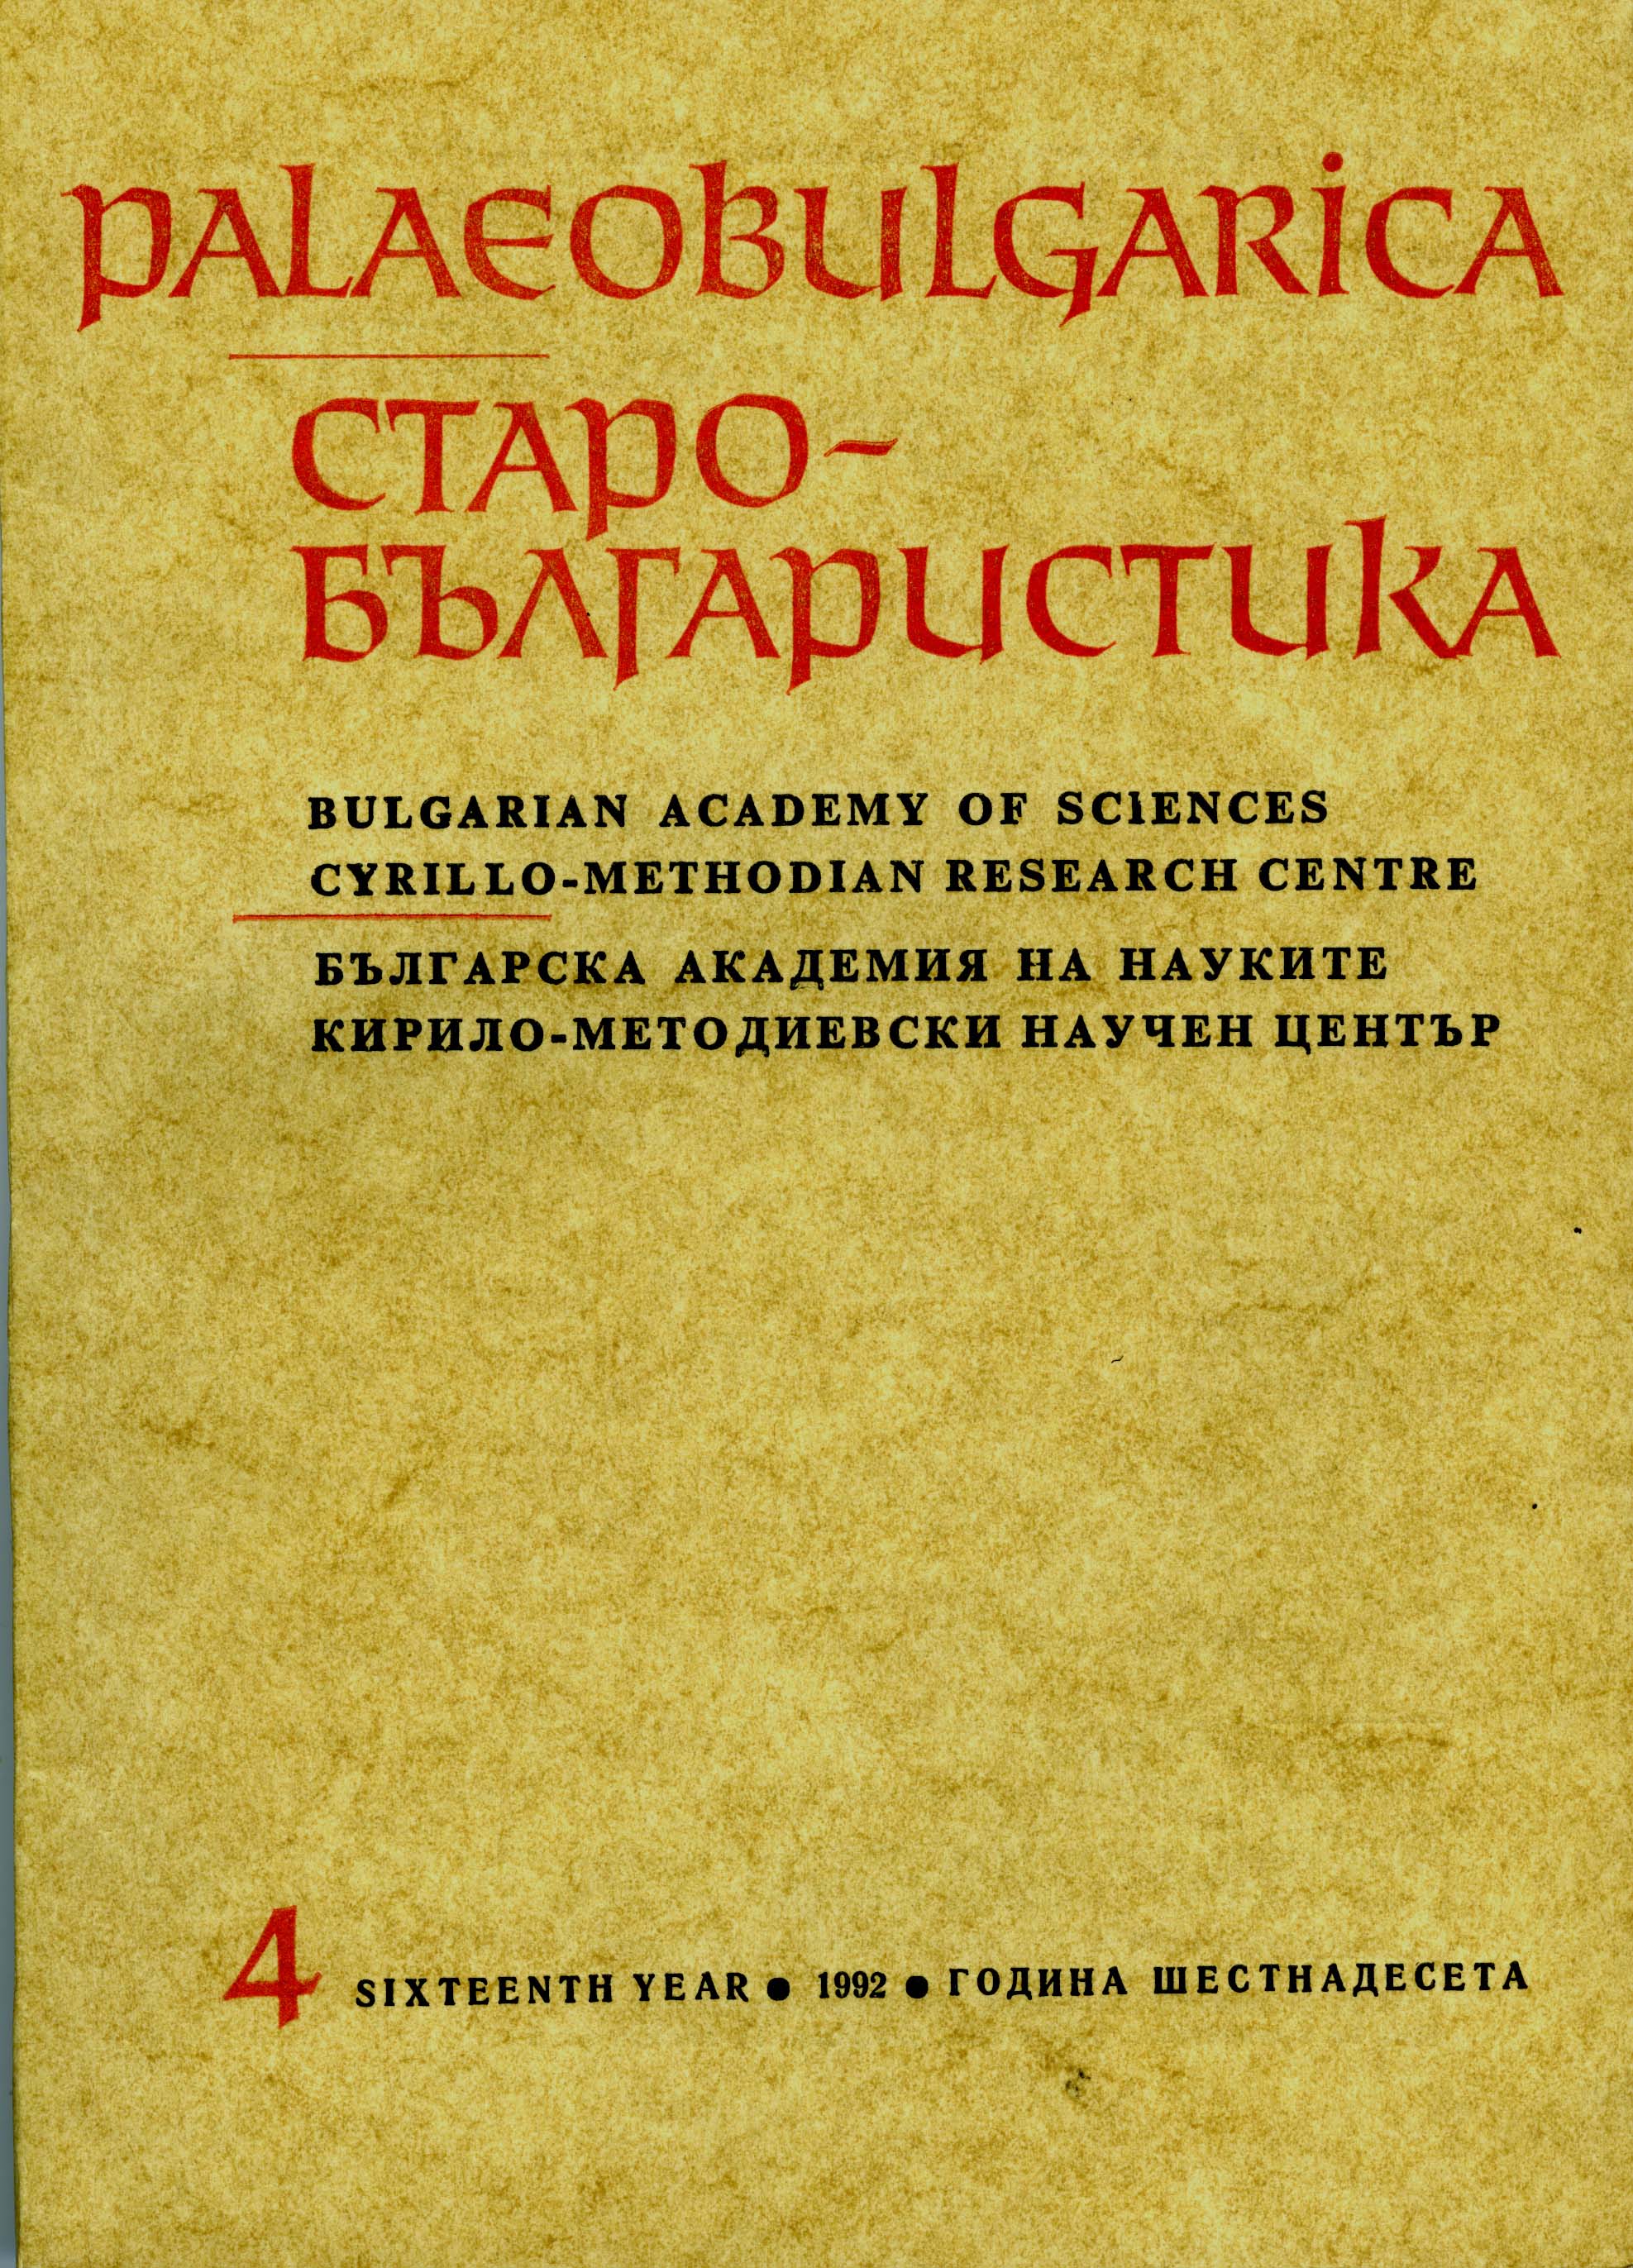 New Edition of the Vita of Methodius